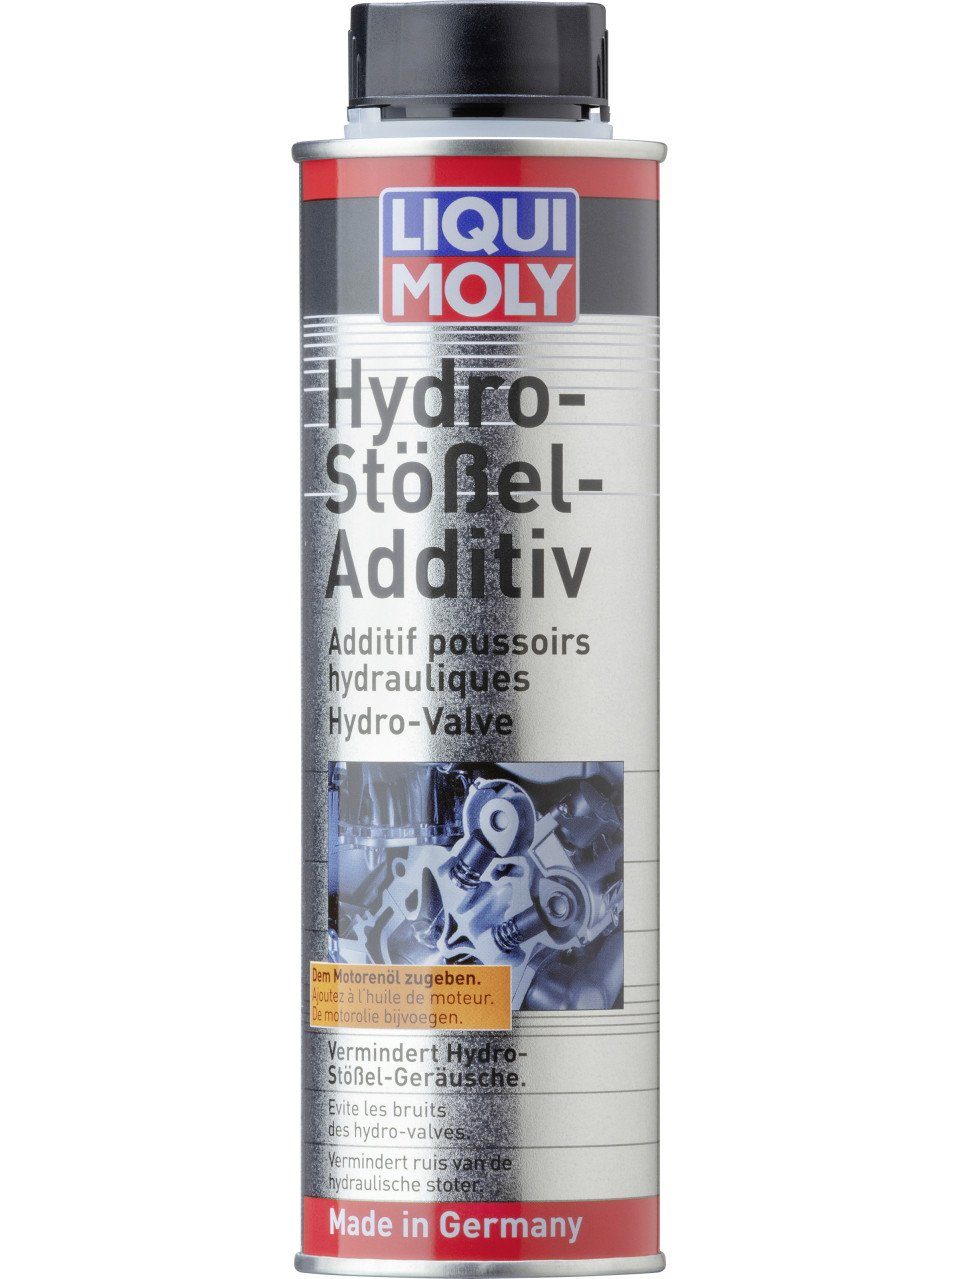 Liqui Moly Diesel-Additiv Liqui Moly Hydro-Stößel-Additiv 300 ml | Diesel-Additive